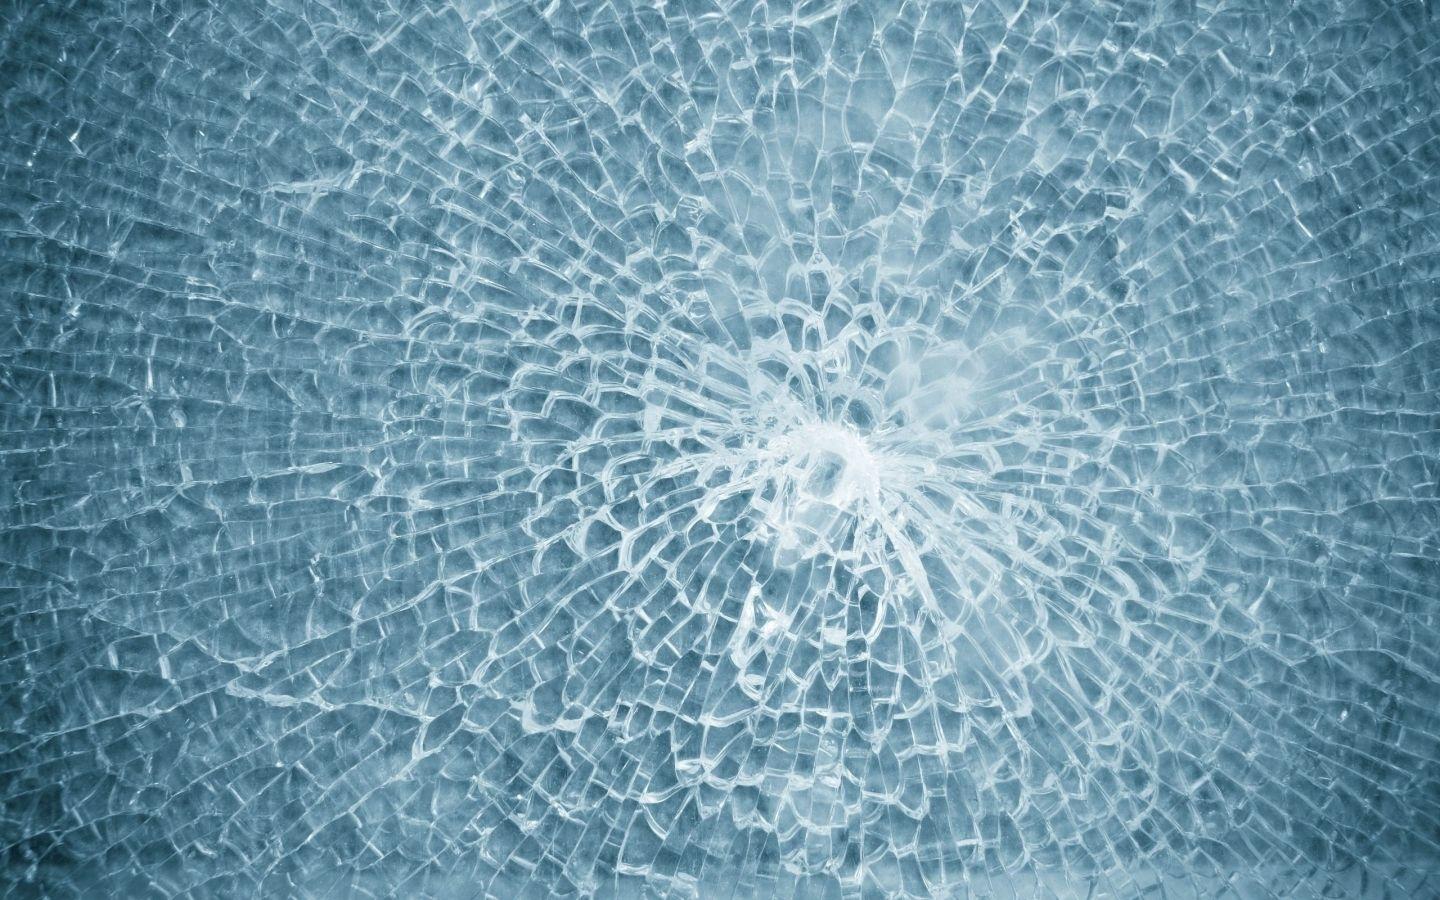 Texture of Broken Glass Mac Wallpaper Download. Free Mac Wallpaper